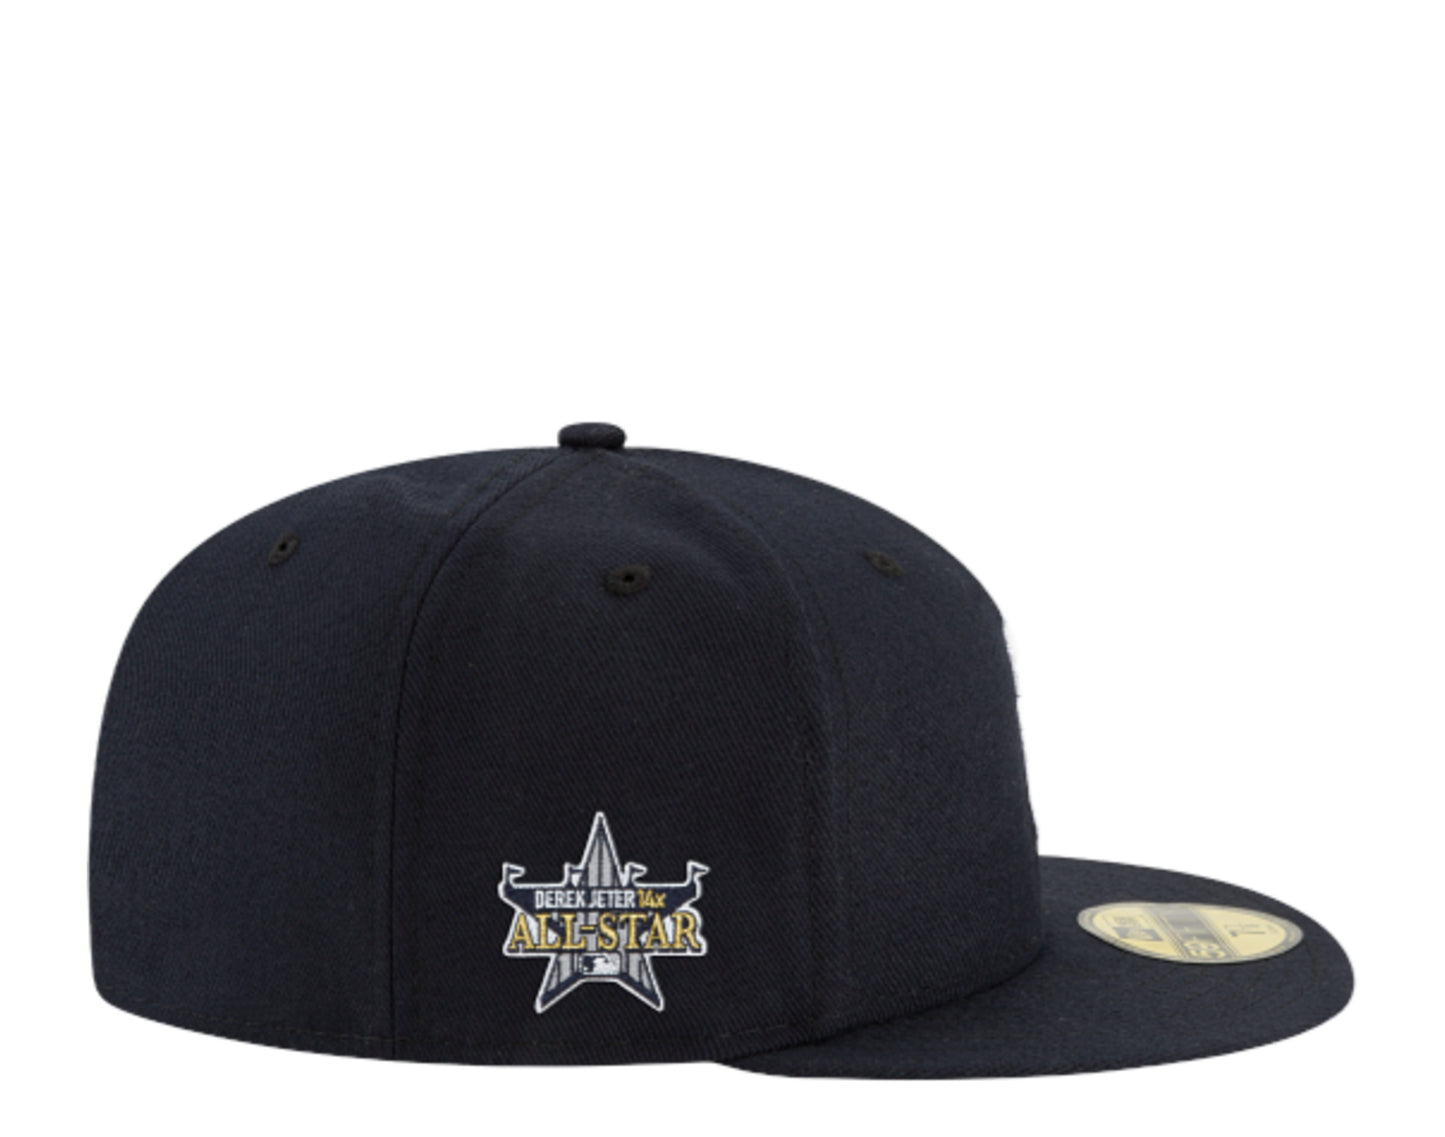 New Era 59FIFTY MLB New York Yankees Derek Jeter 14x All-Star Fitted Hat 7 3/8